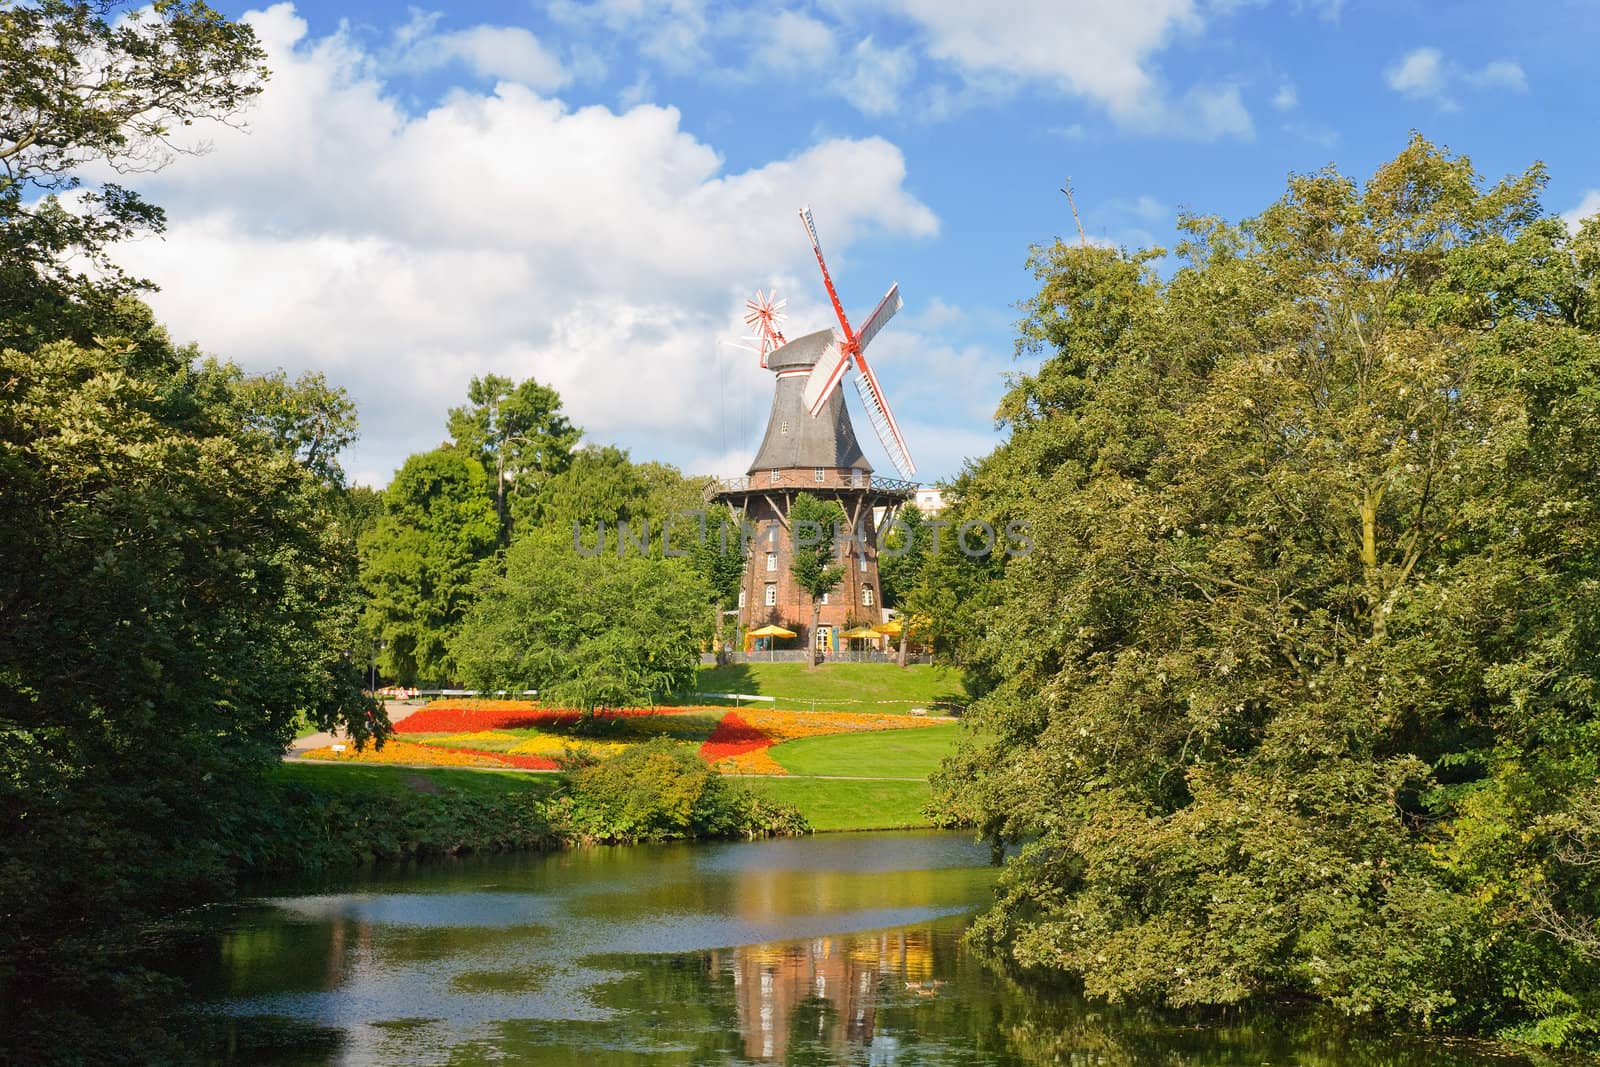 Windmill near a river in Bremen, Germany by y_serge